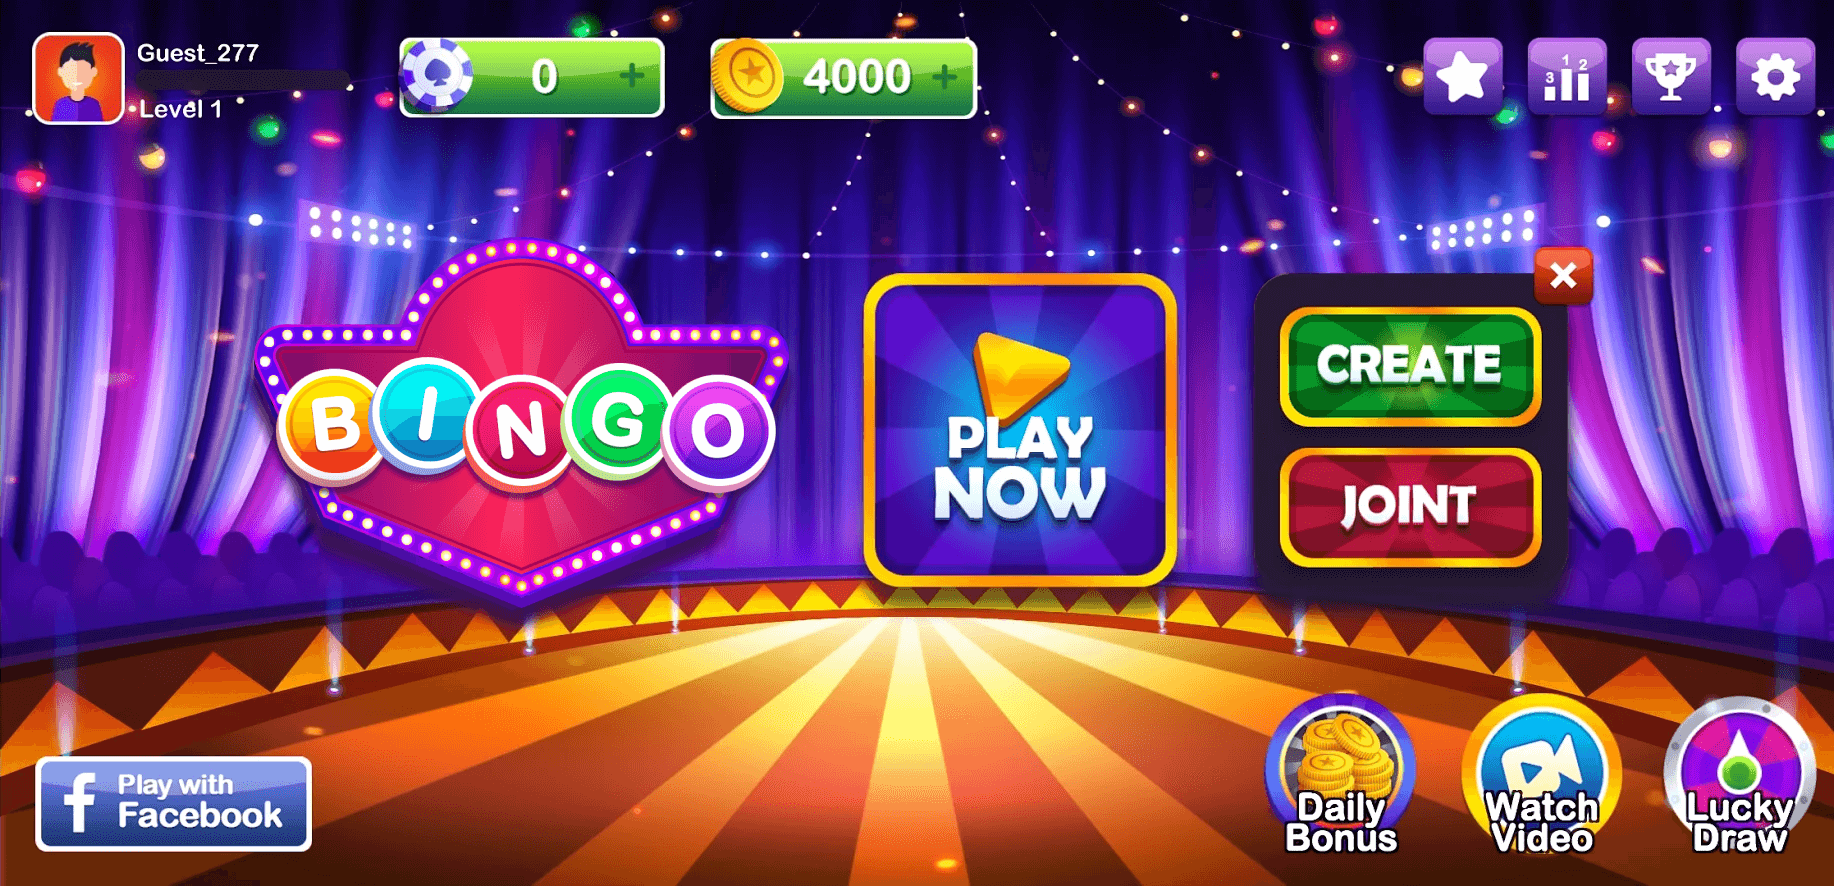 Bingo Game Dashboard Images